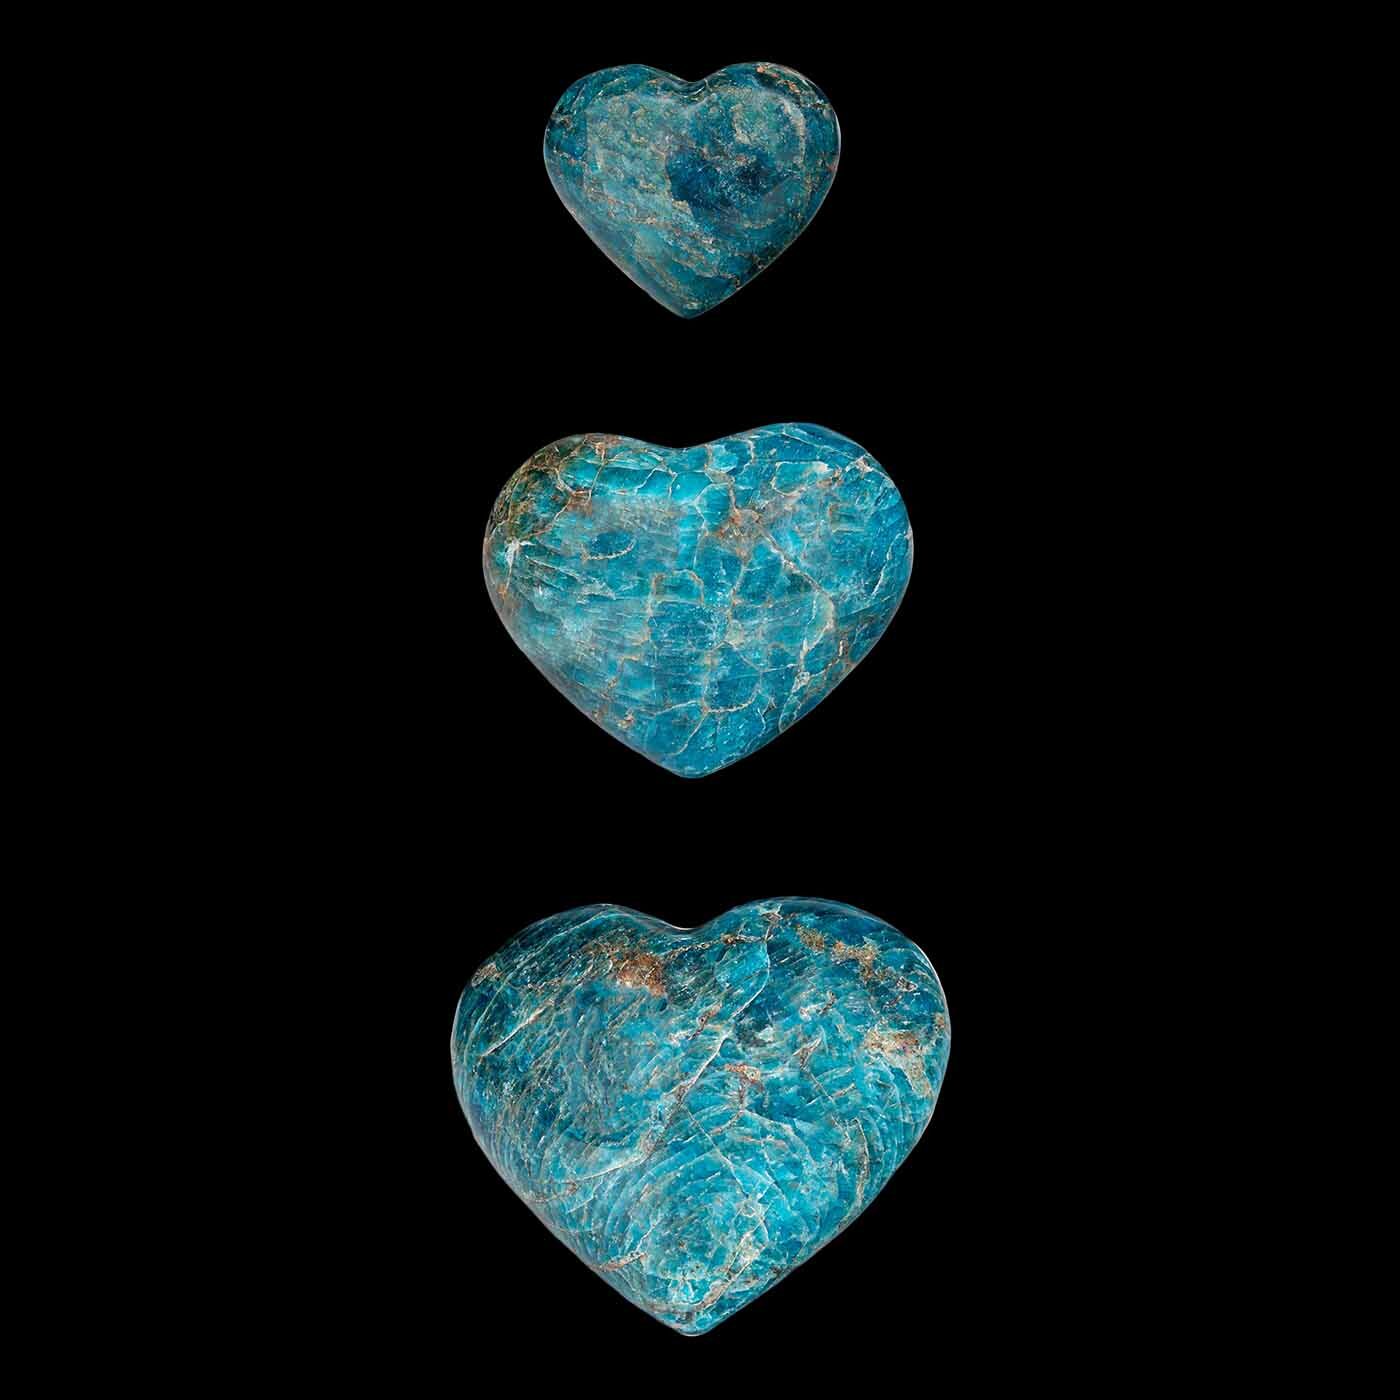 Blue Apatite Heart